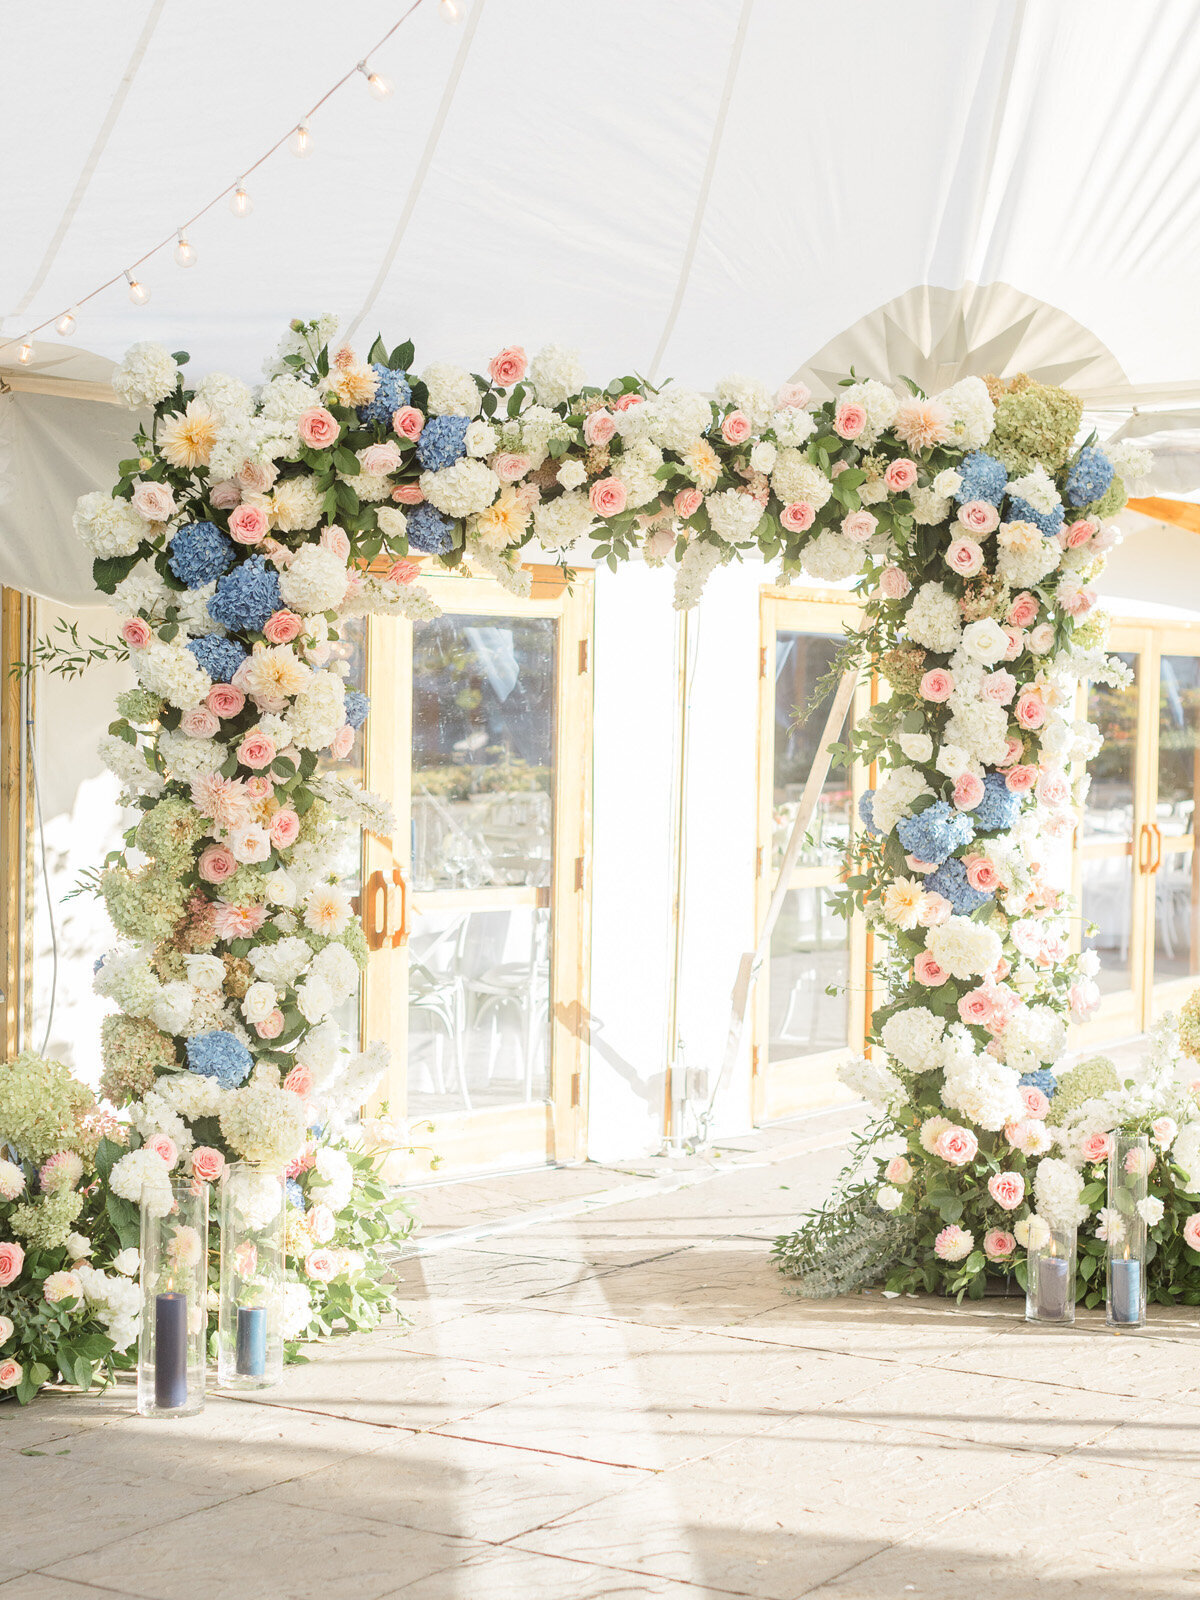 Kate-Murtaugh-Events-Newport-wedding-floral-arch-tent-entrance-Castle-Hill-Inn